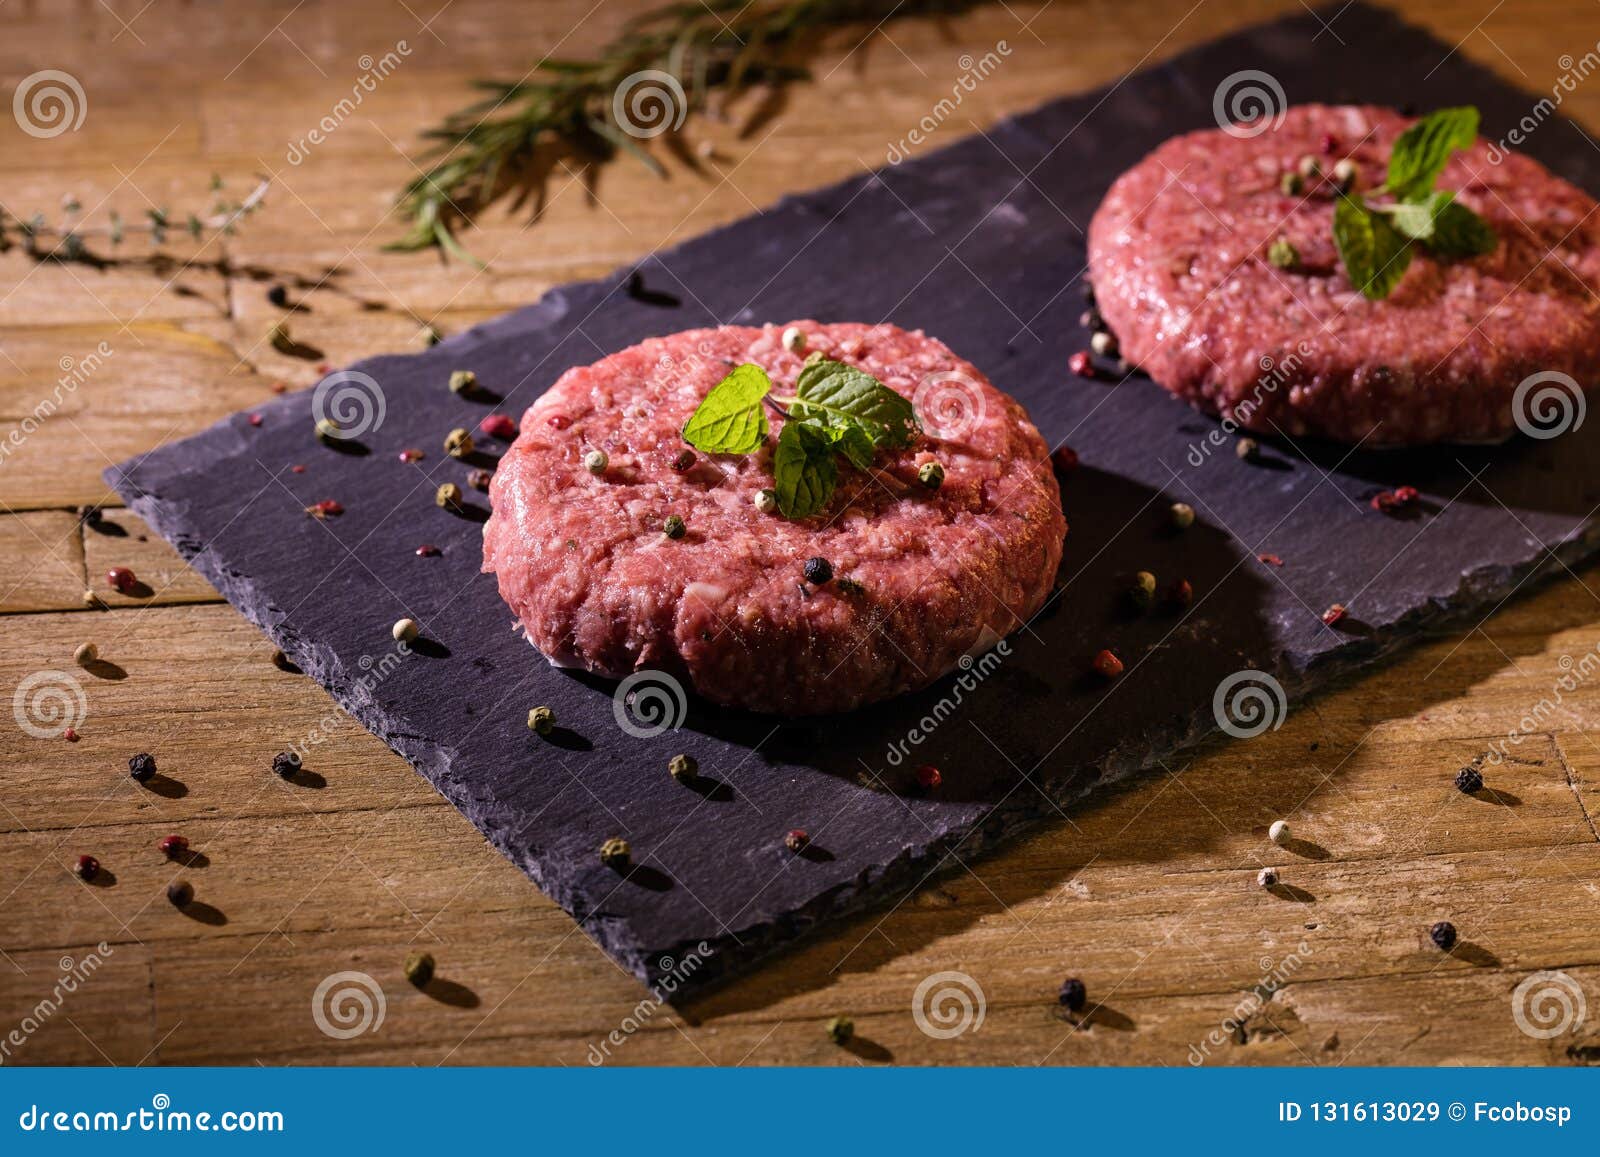 hamburguer meat on slate dish